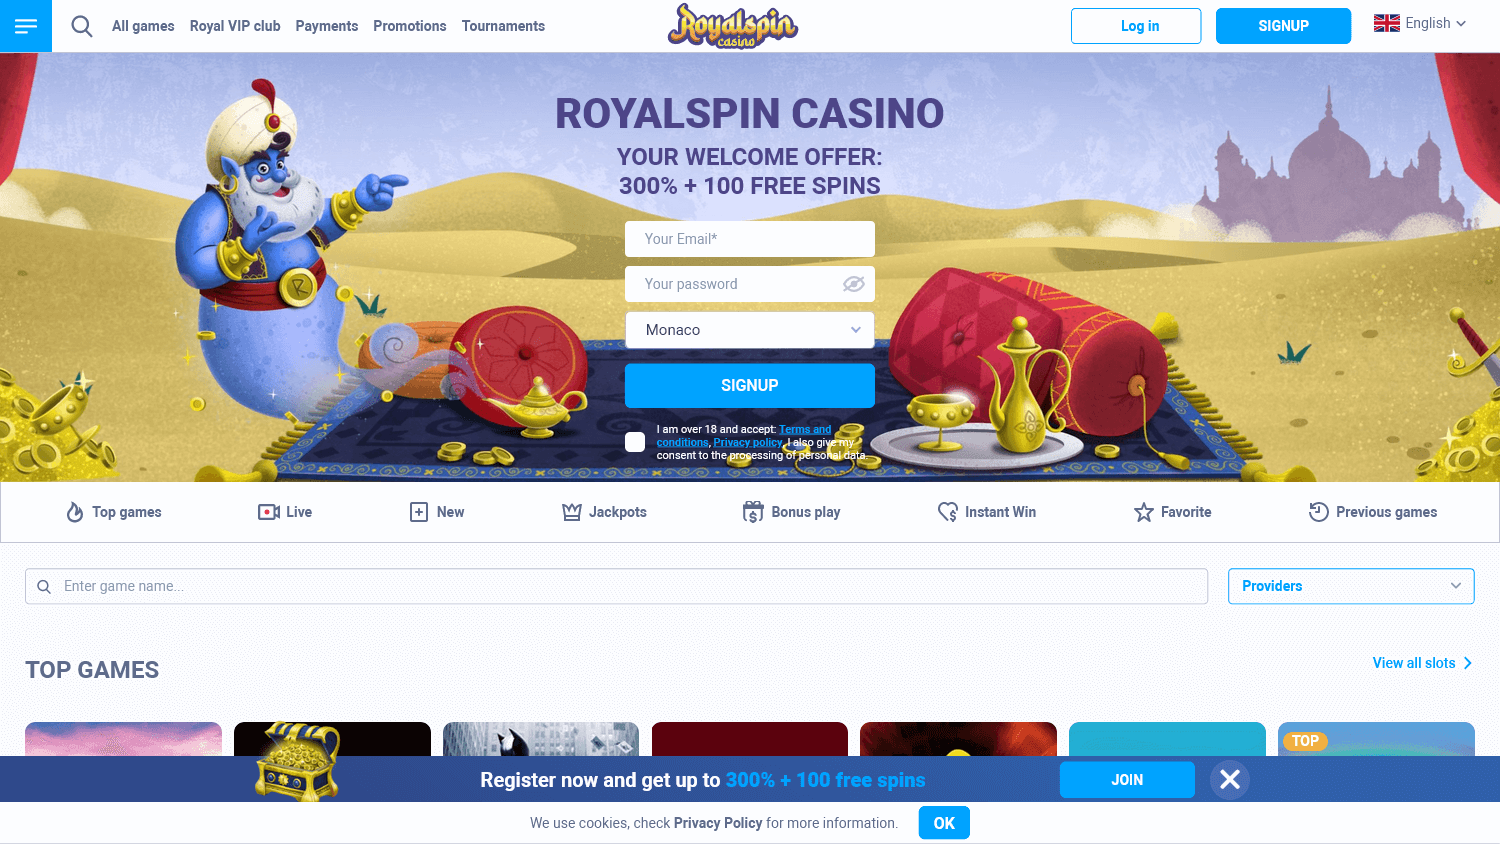 royalspin_casino_homepage_desktop